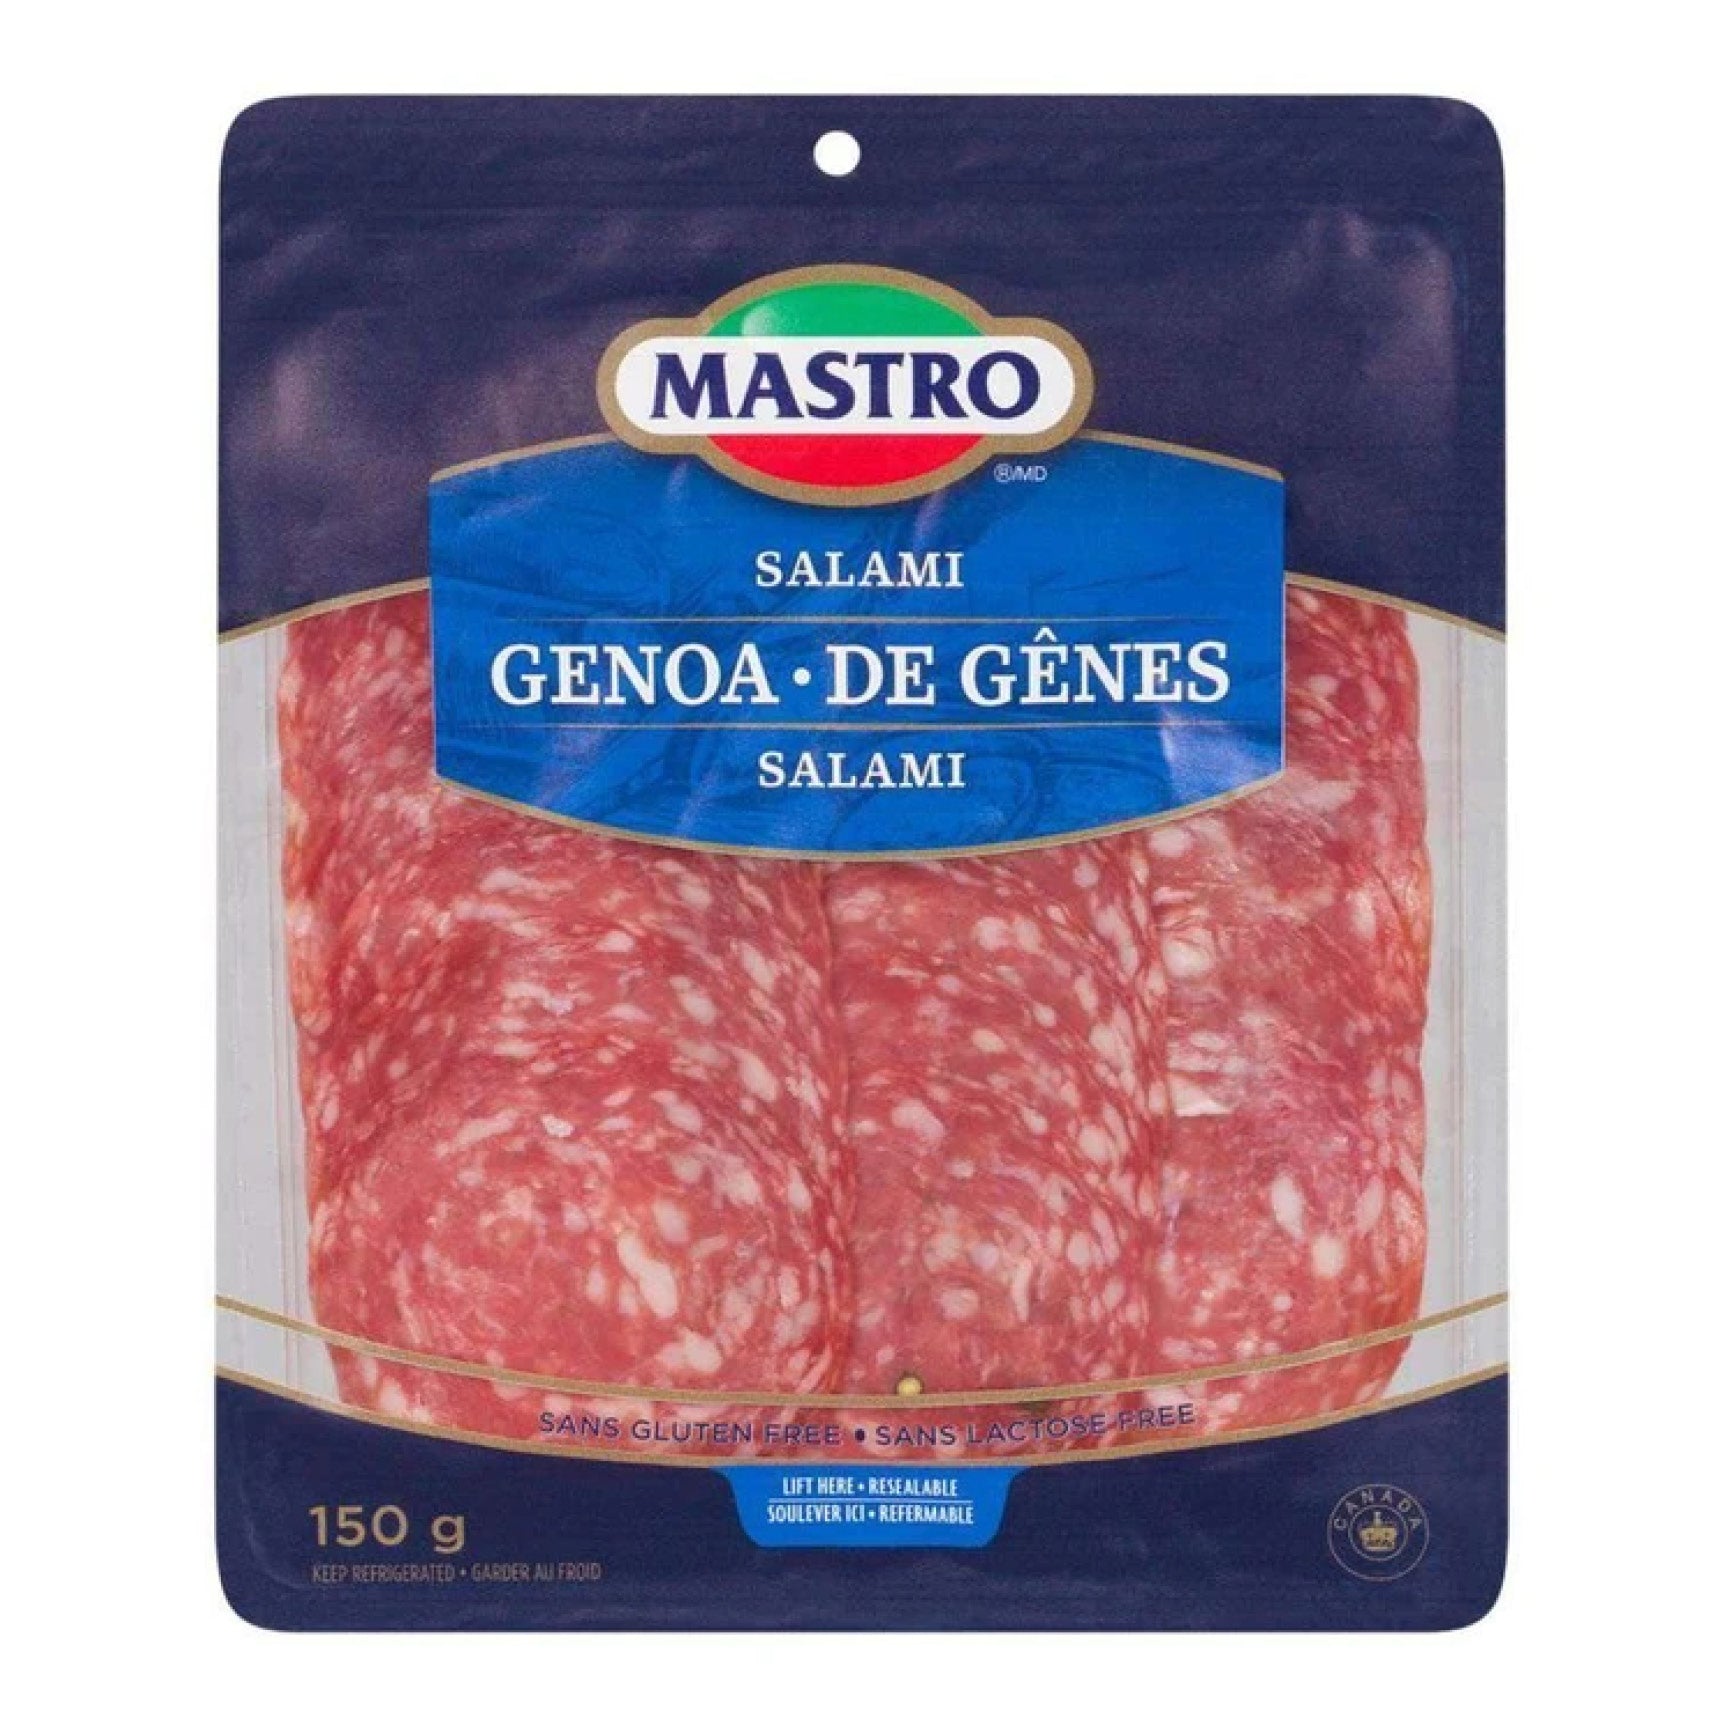 Mastro Genoa Sweet Salami, 150g